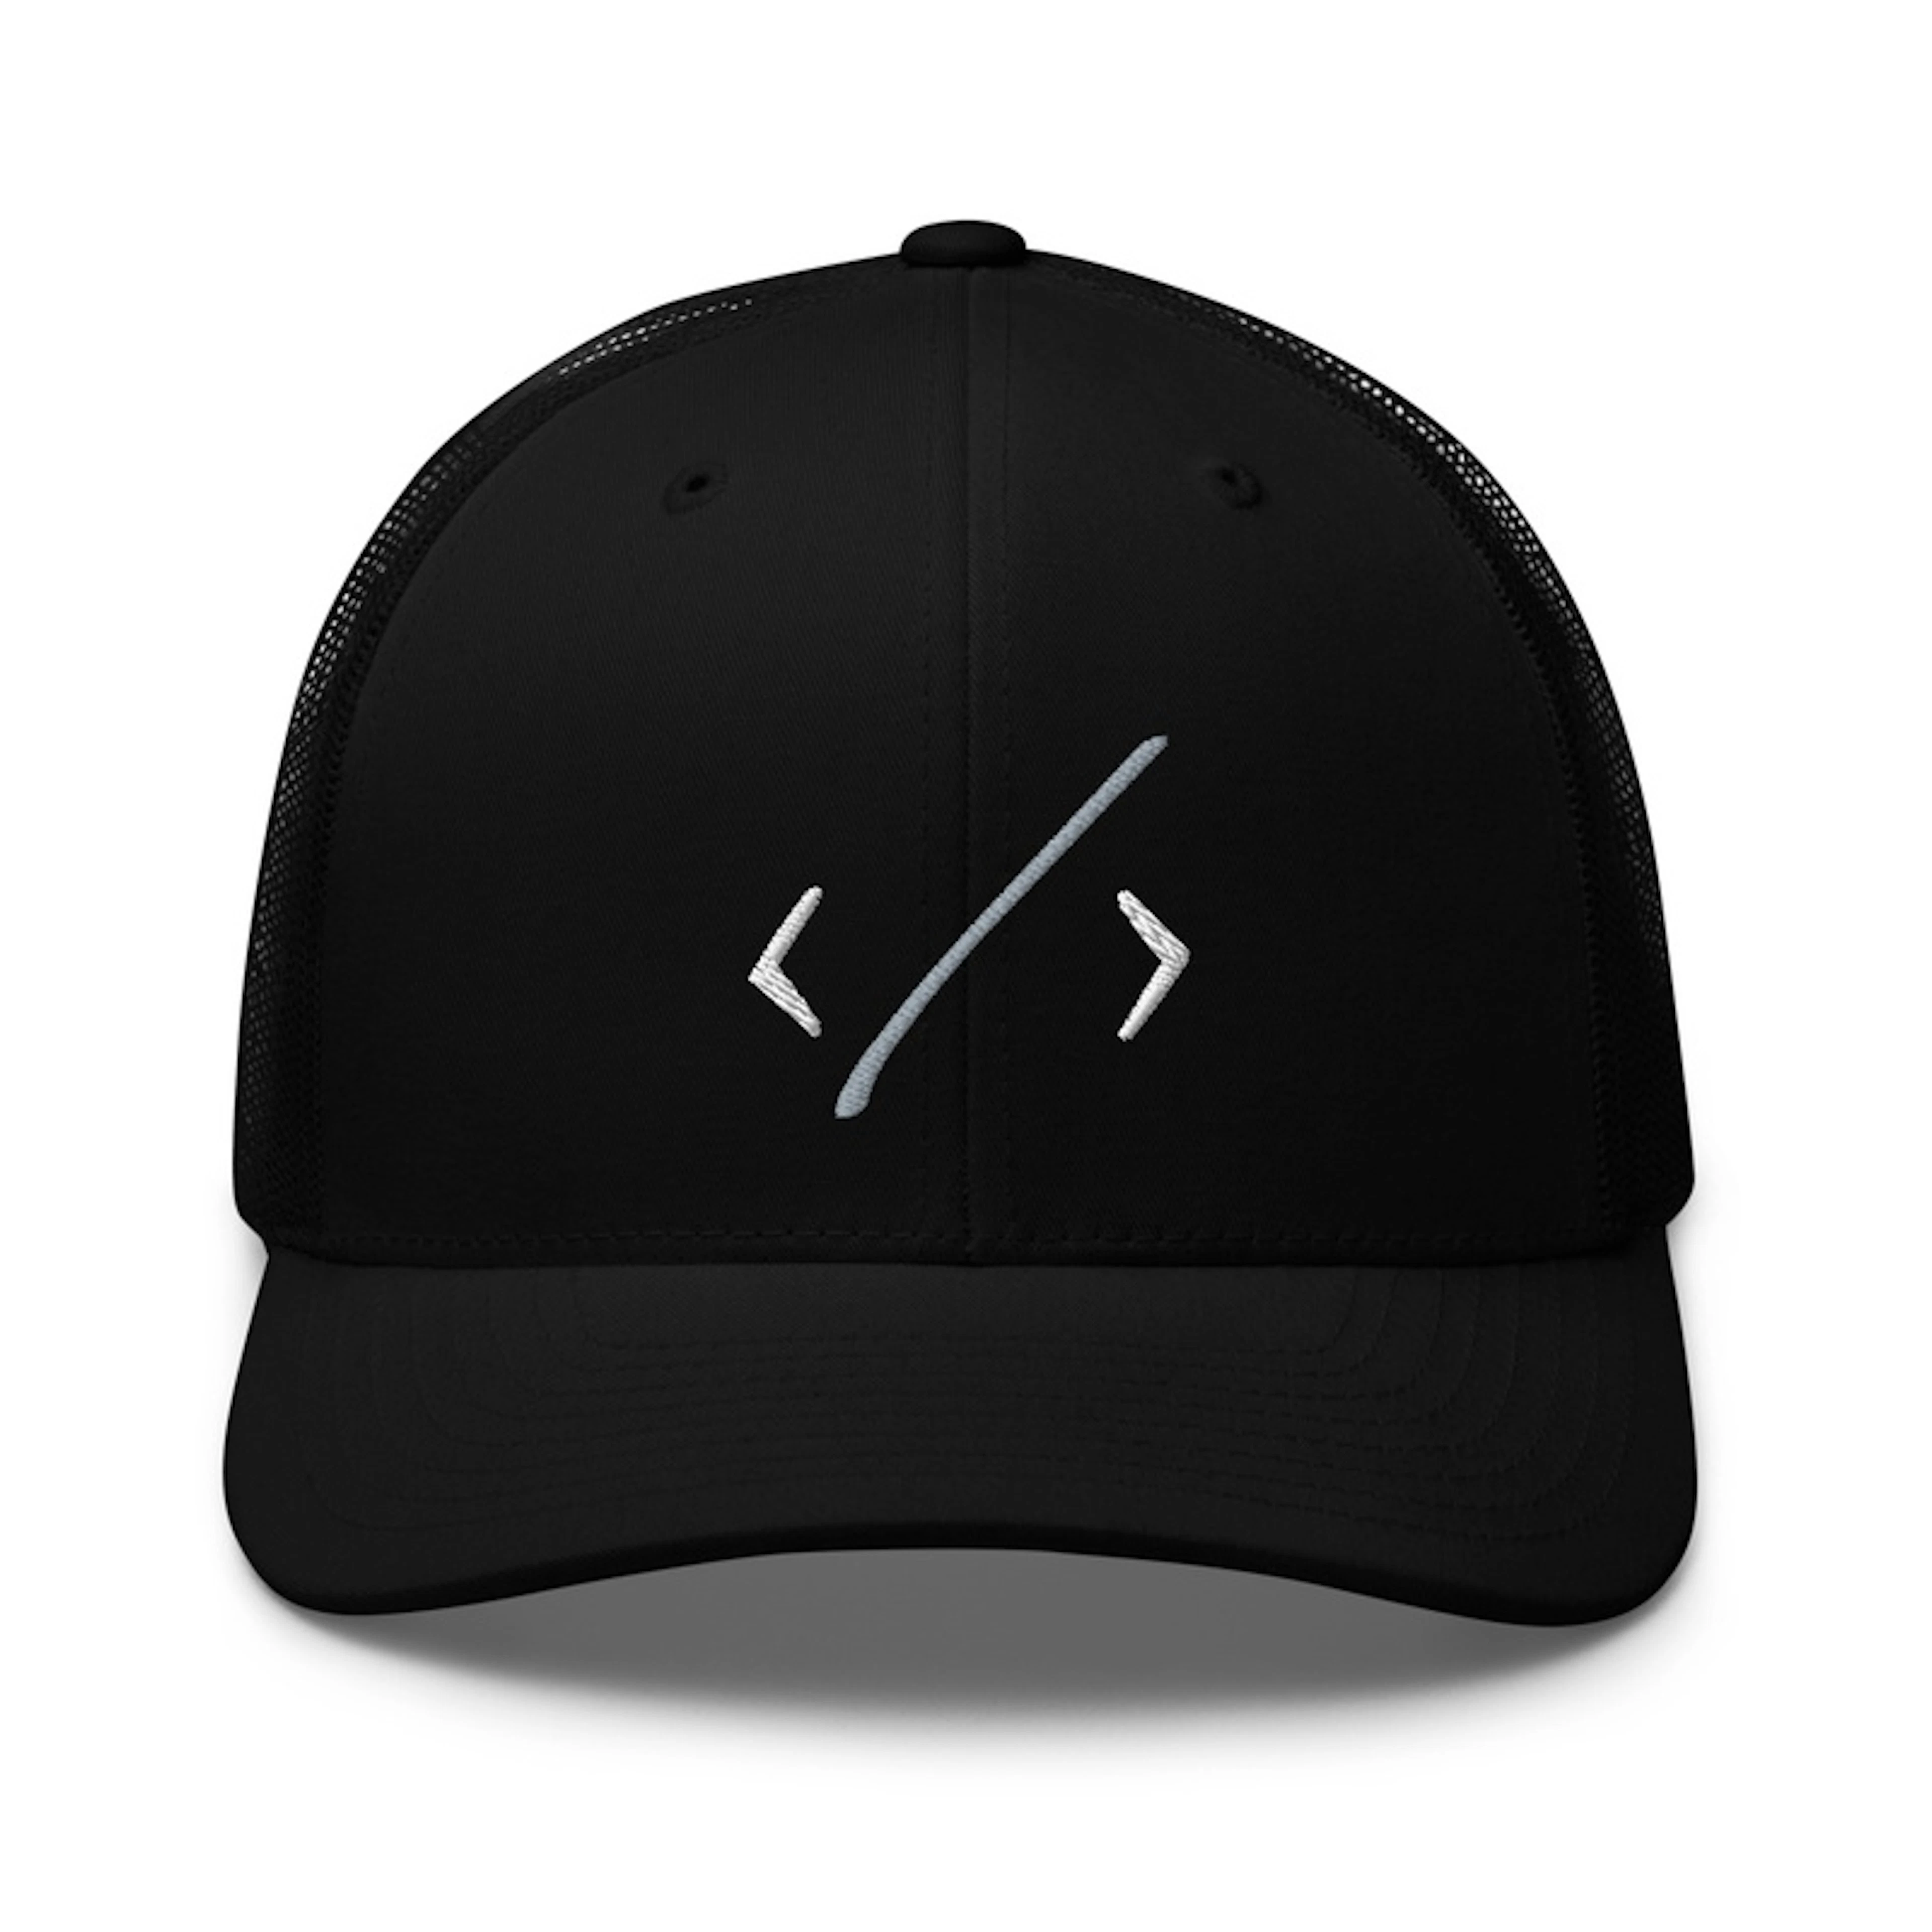 Programmer's Crown - Premium Cap